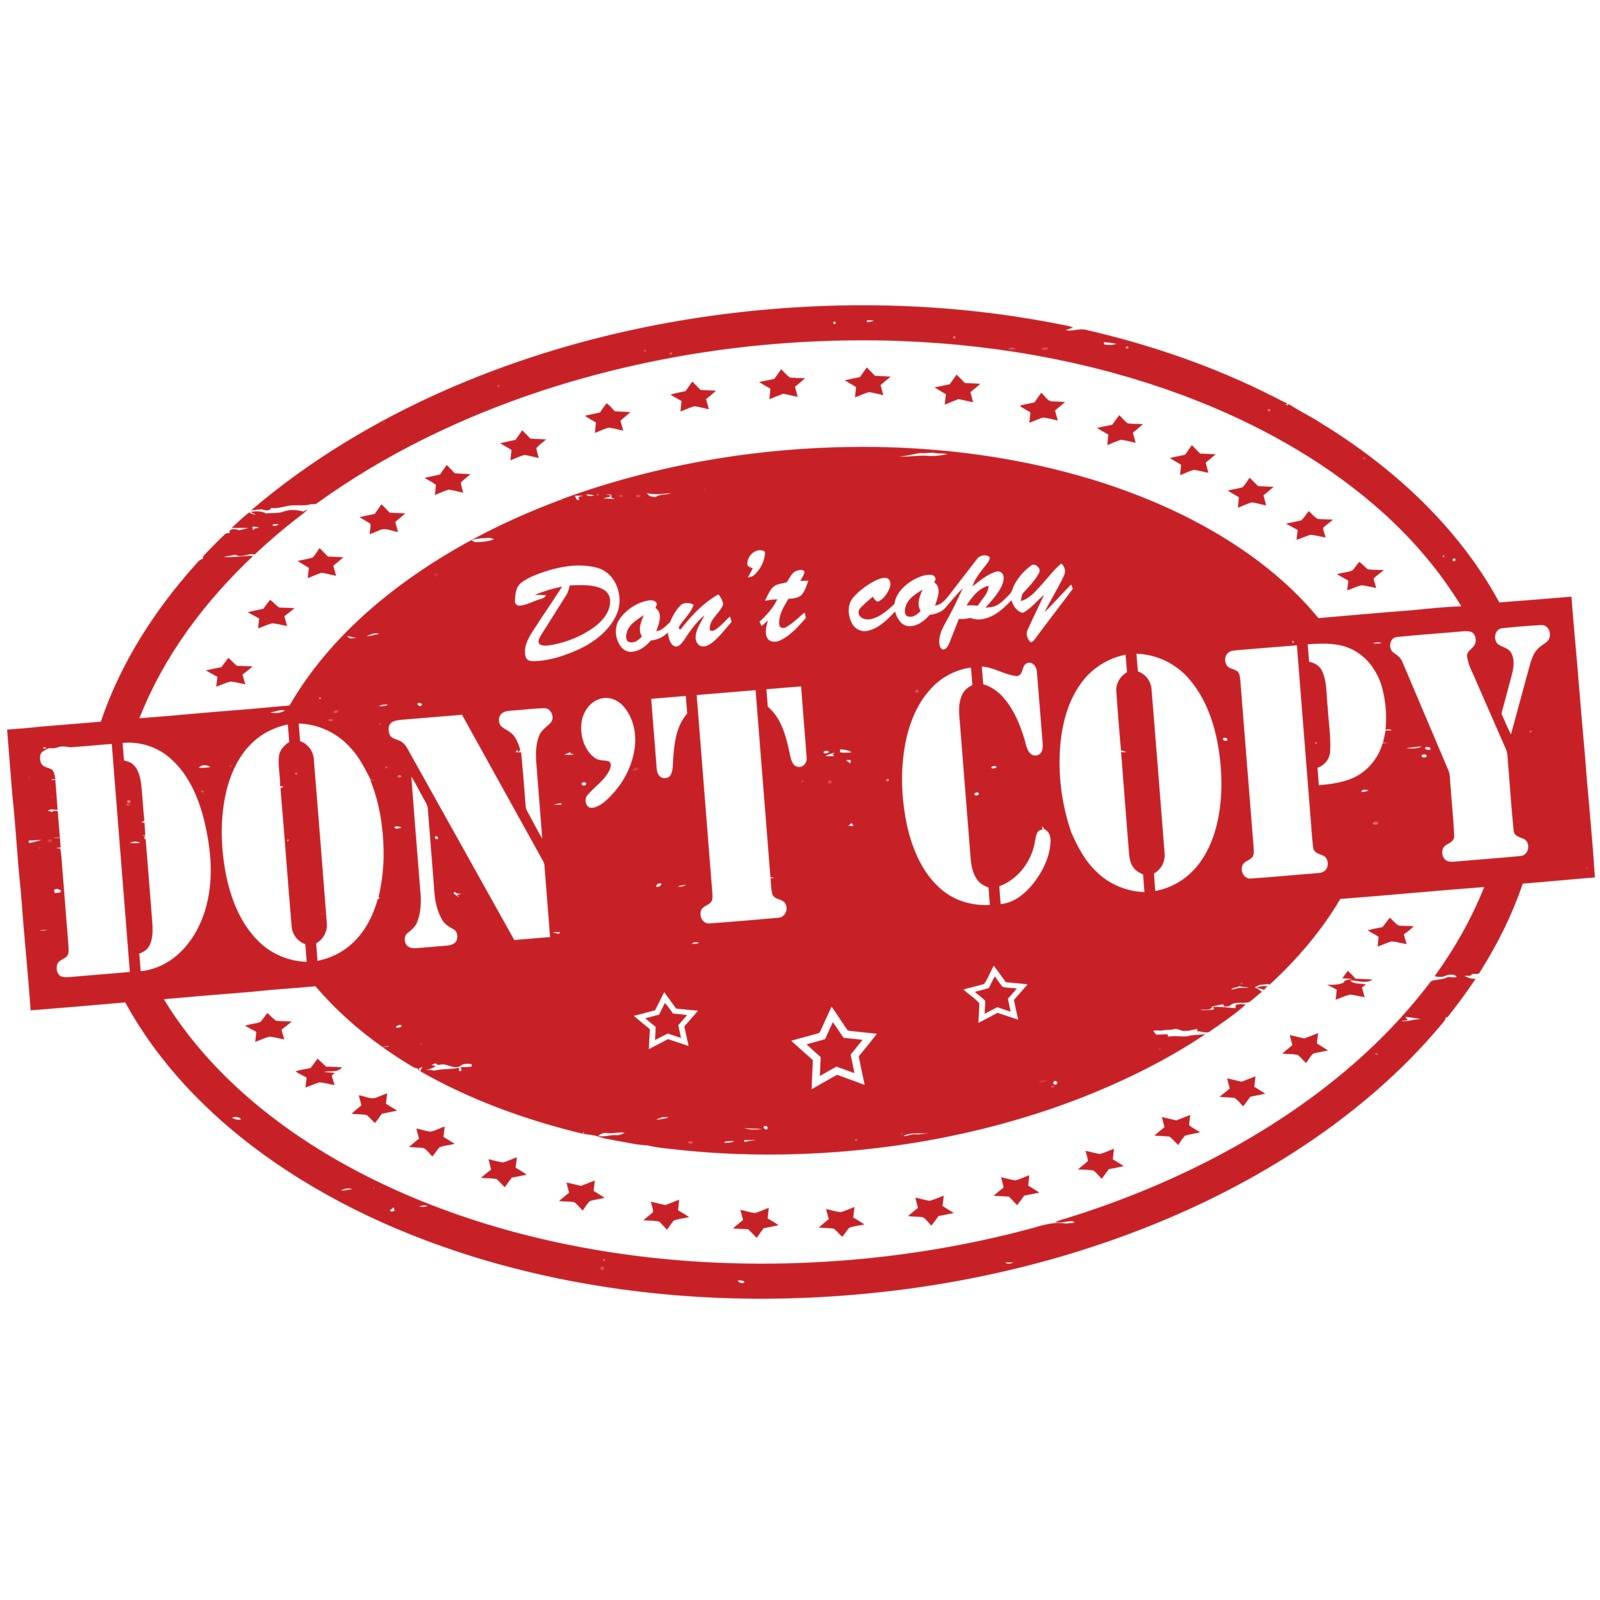 Don t copy by carmenbobo